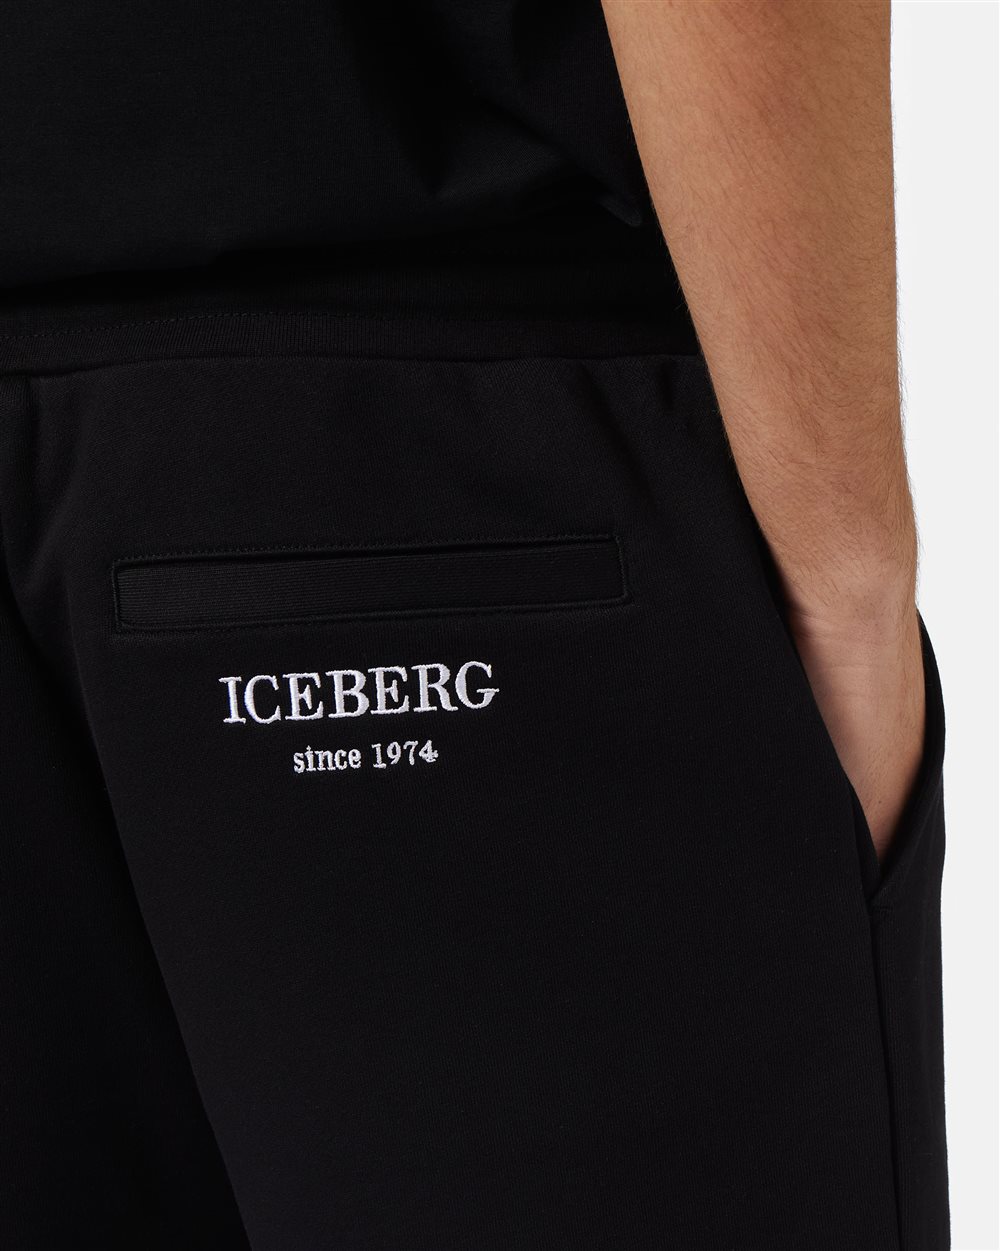 Bermuda shorts with drawstring - Iceberg - Official Website